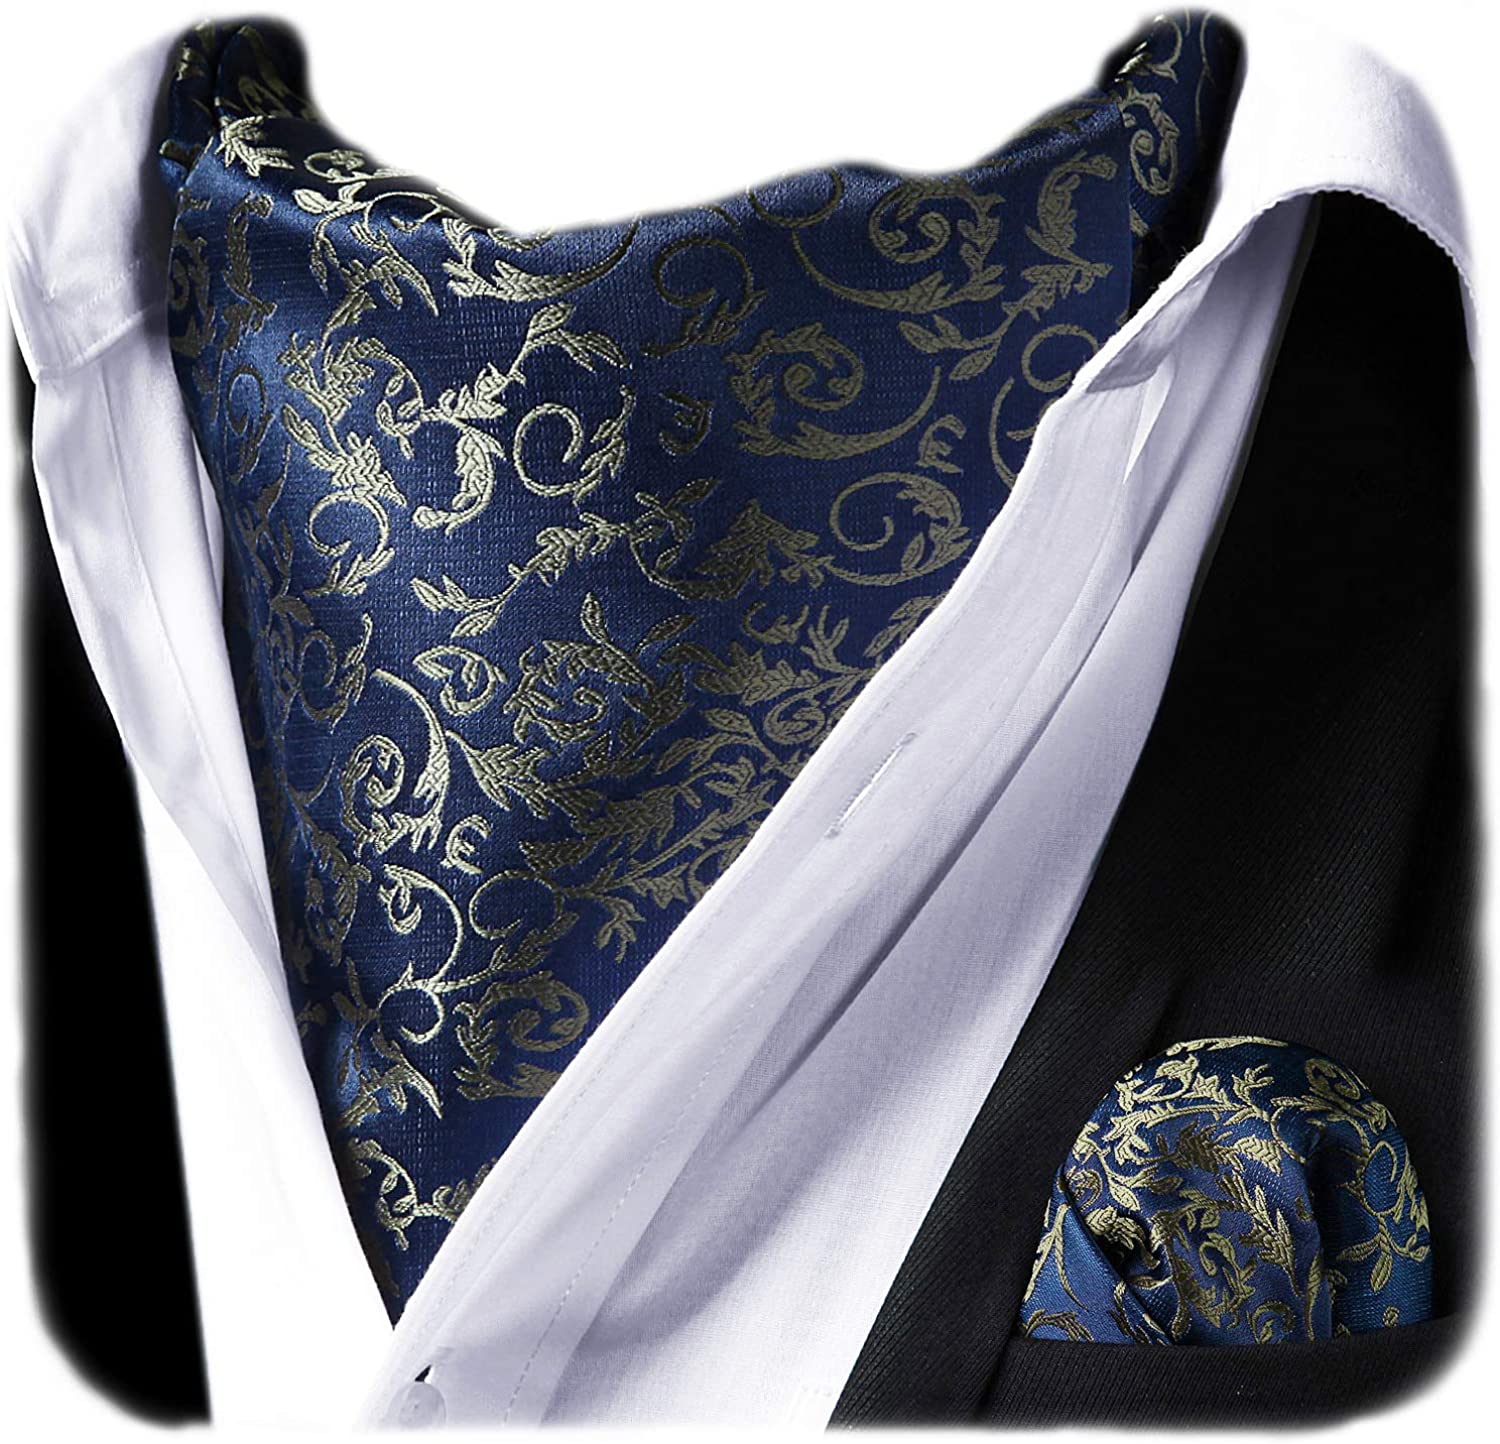 HISDERN Men's Cravat Ascot Floral Paisley Wedding Cravats Handkerchief Jacquard Woven Business Ascot Tie & Pocket Square Set